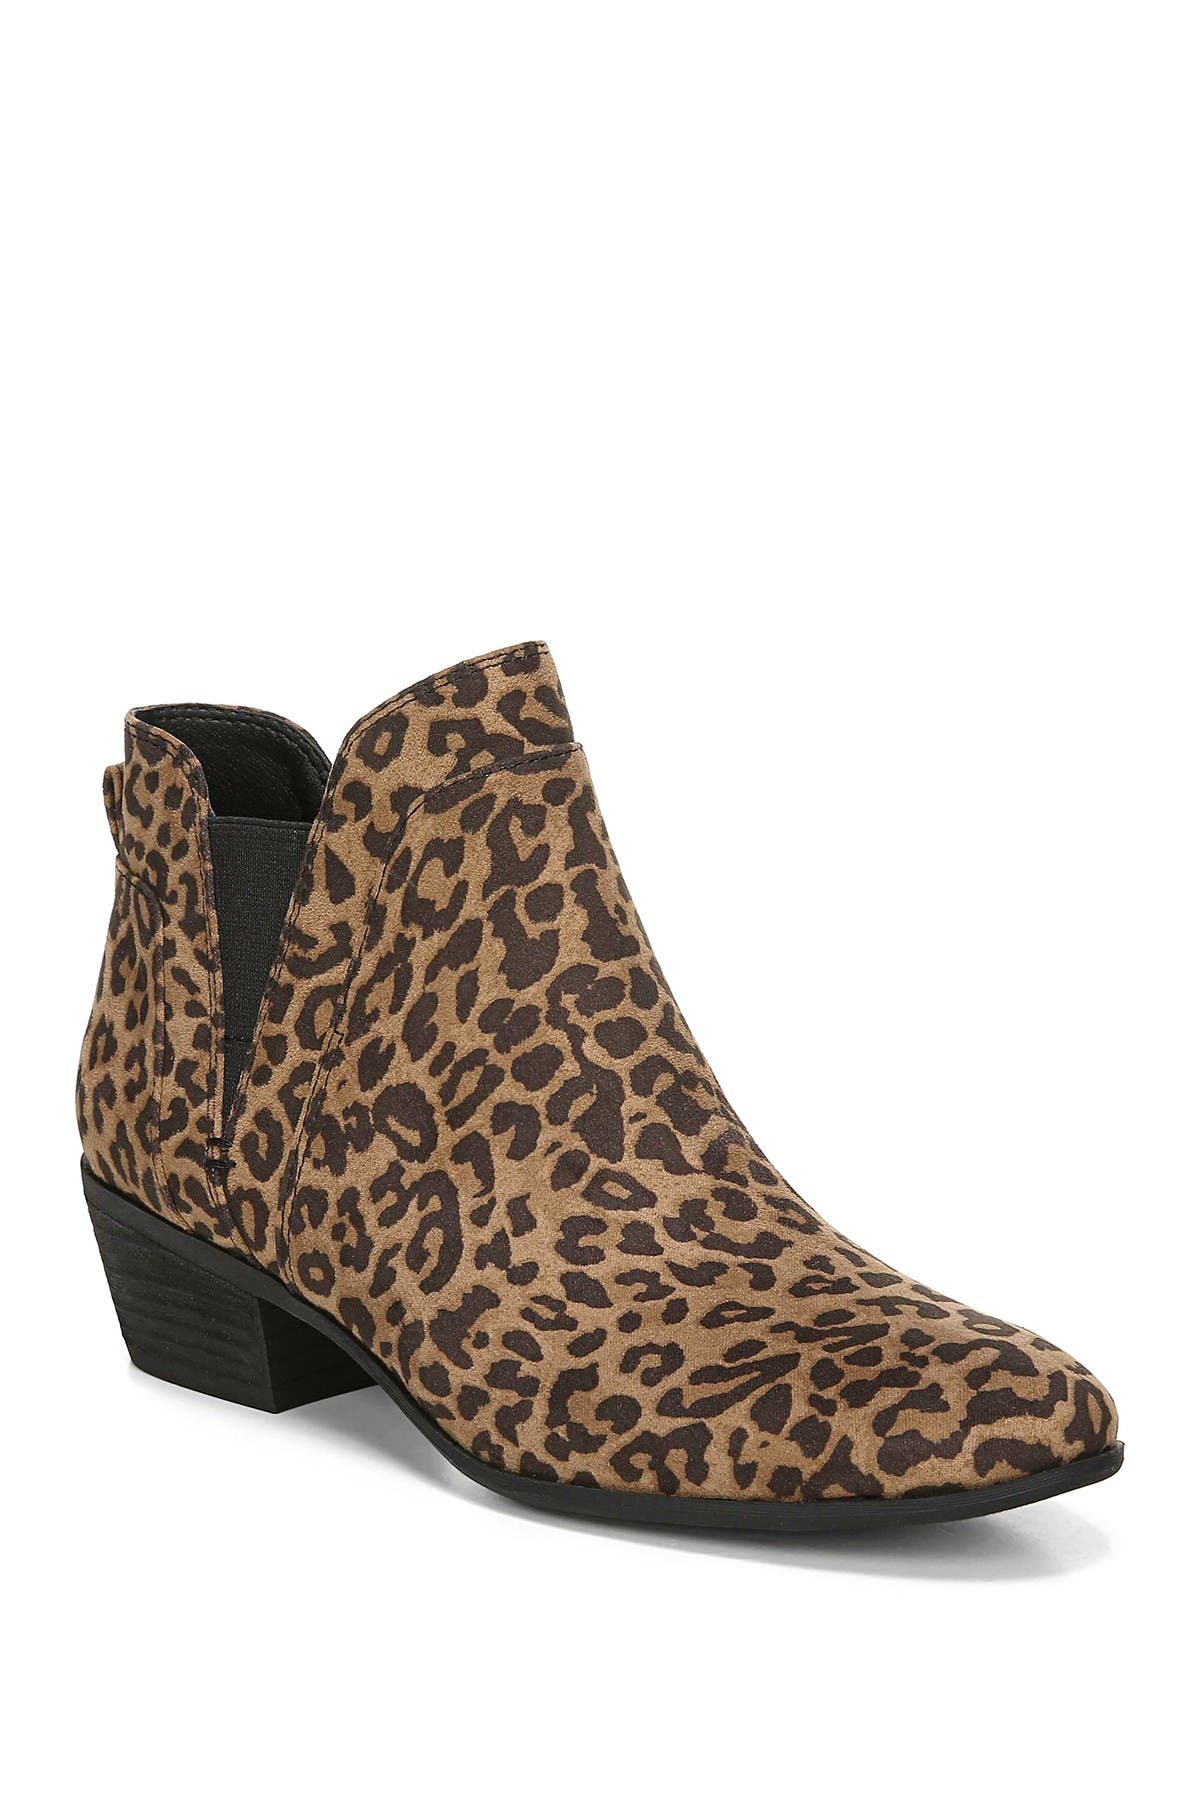 sam edelman leopard ankle boots